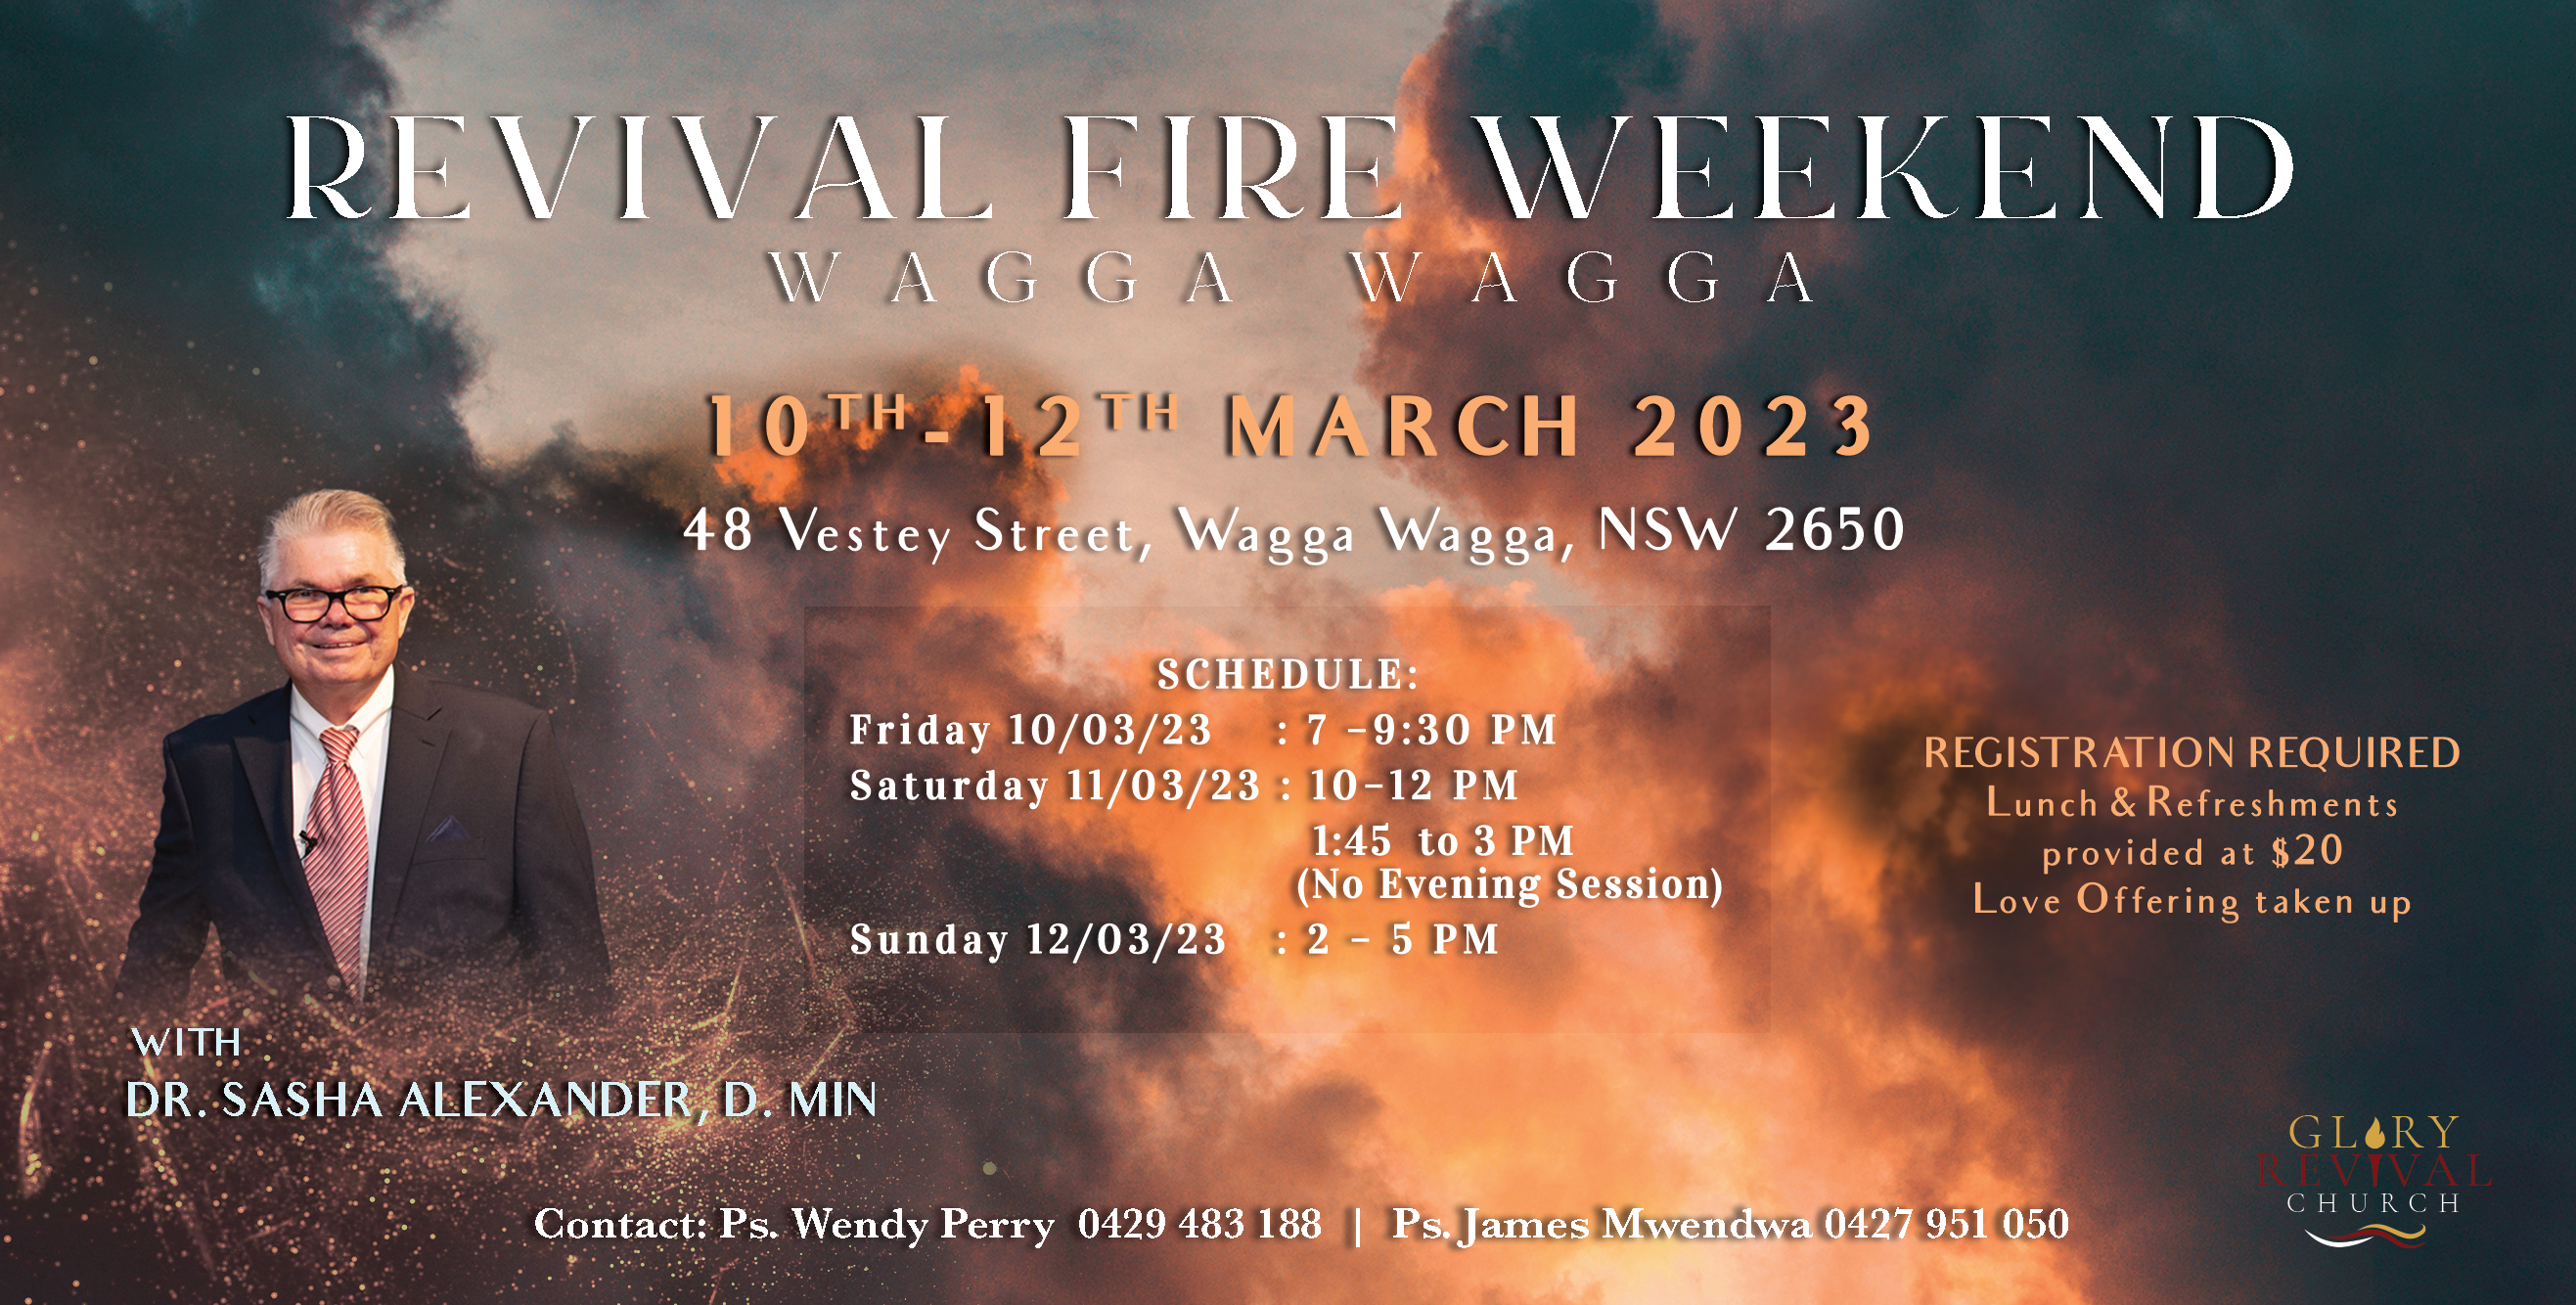 Revival Fire Weekend – Wagga Wagga With Dr Sasha Alexander